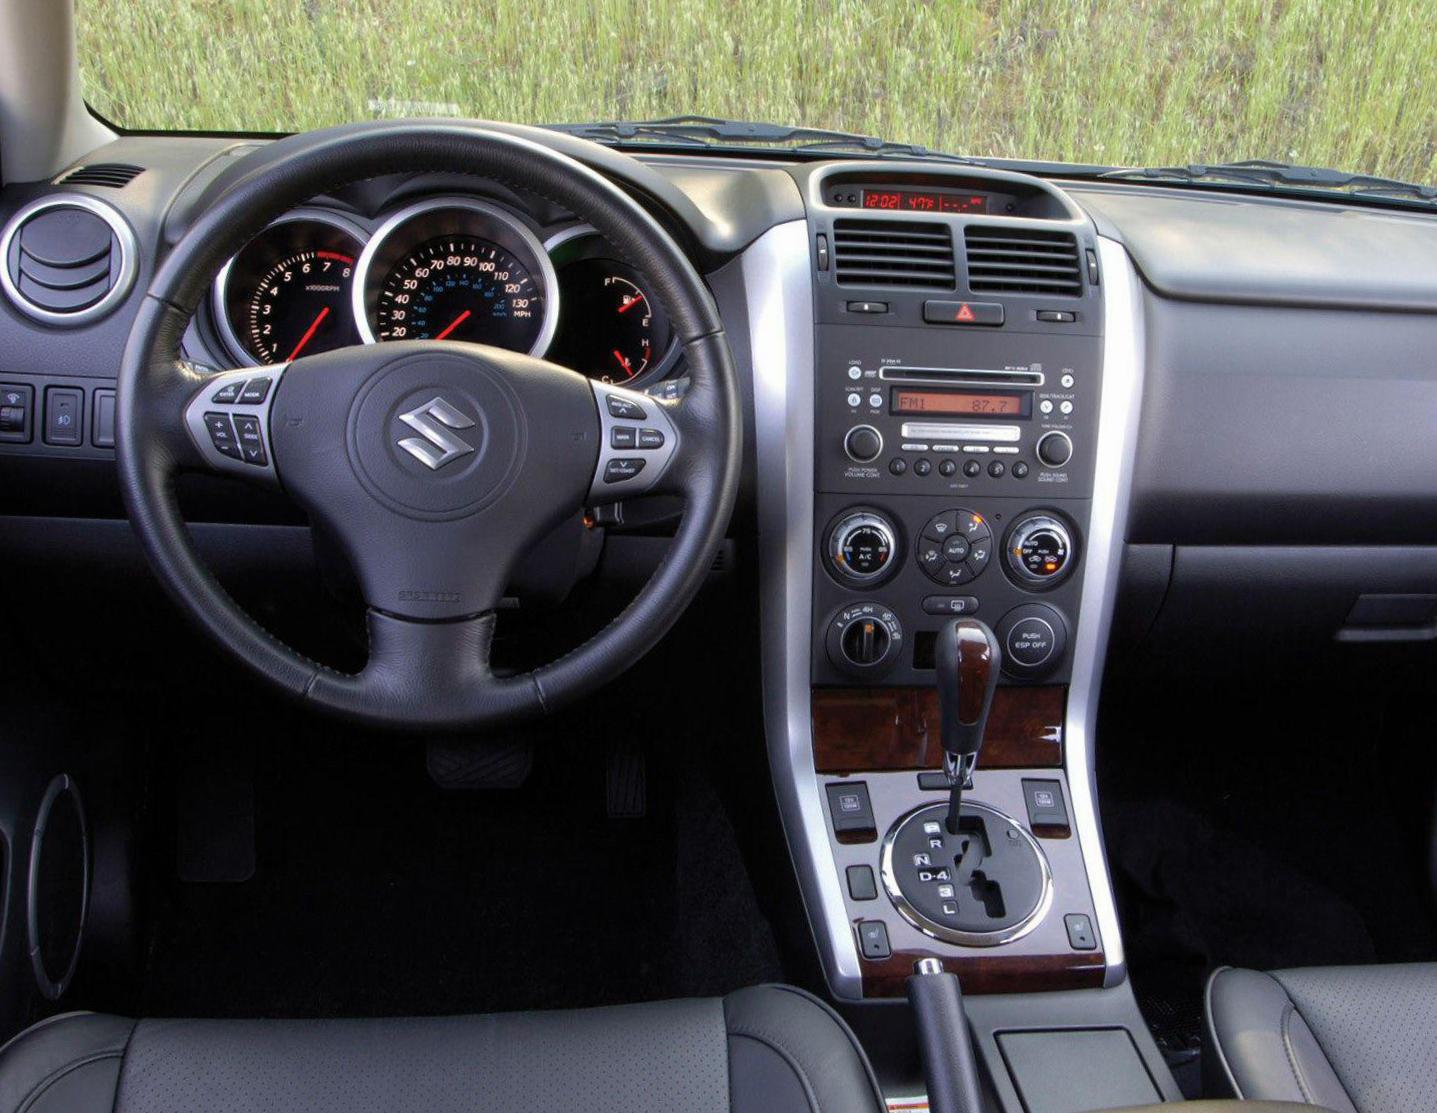 Grand Vitara 5 doors Suzuki Specification sedan